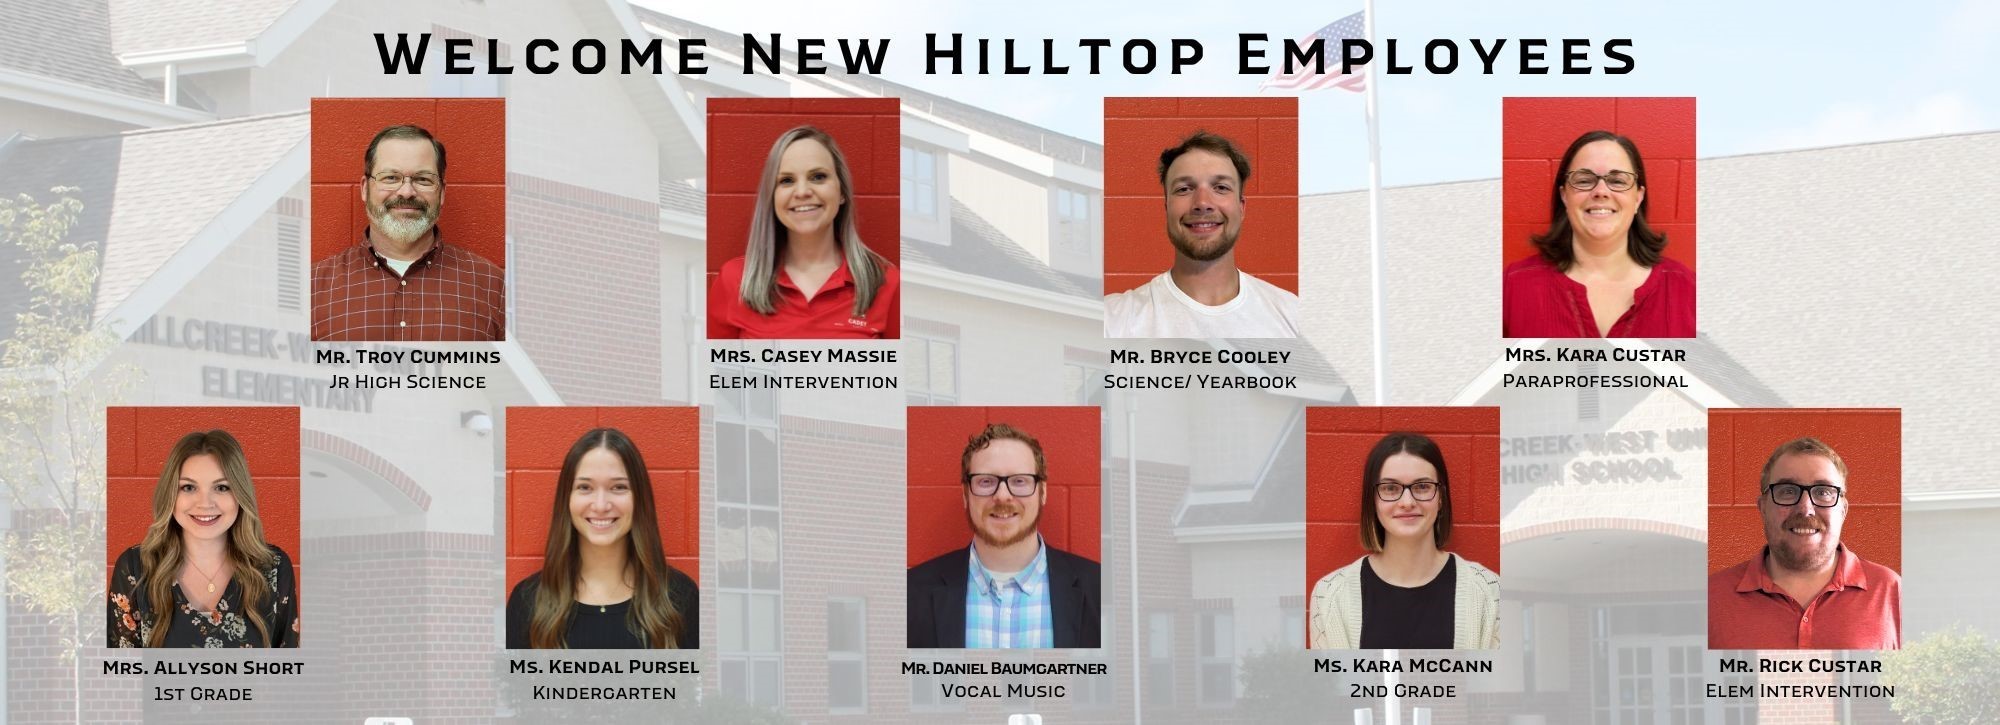 New Hilltop Employees